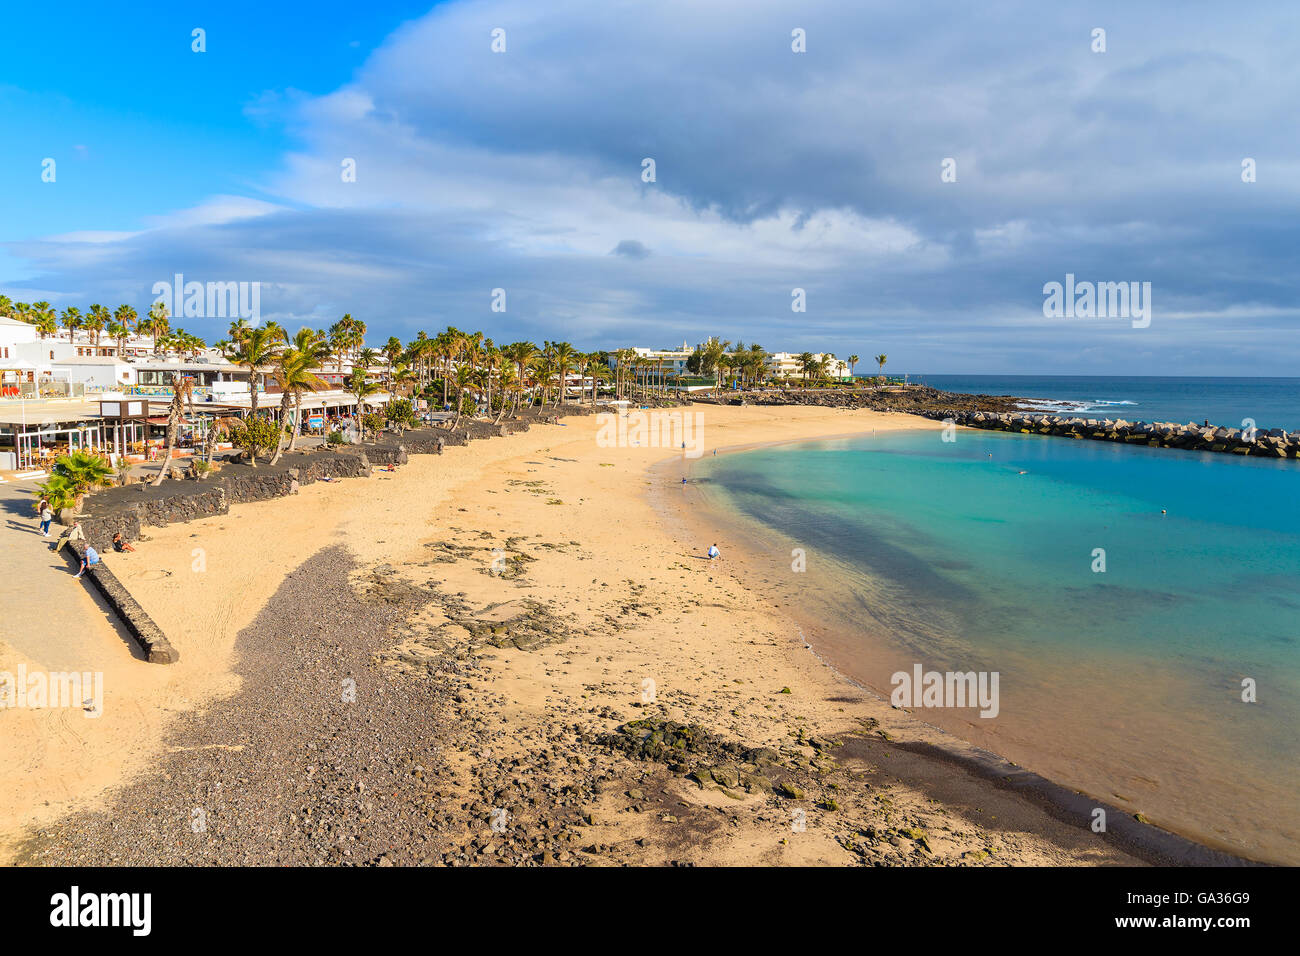 View of Flamingo beach in Playa Blanca on coast of Lanzarote island, Spain Stock Photo